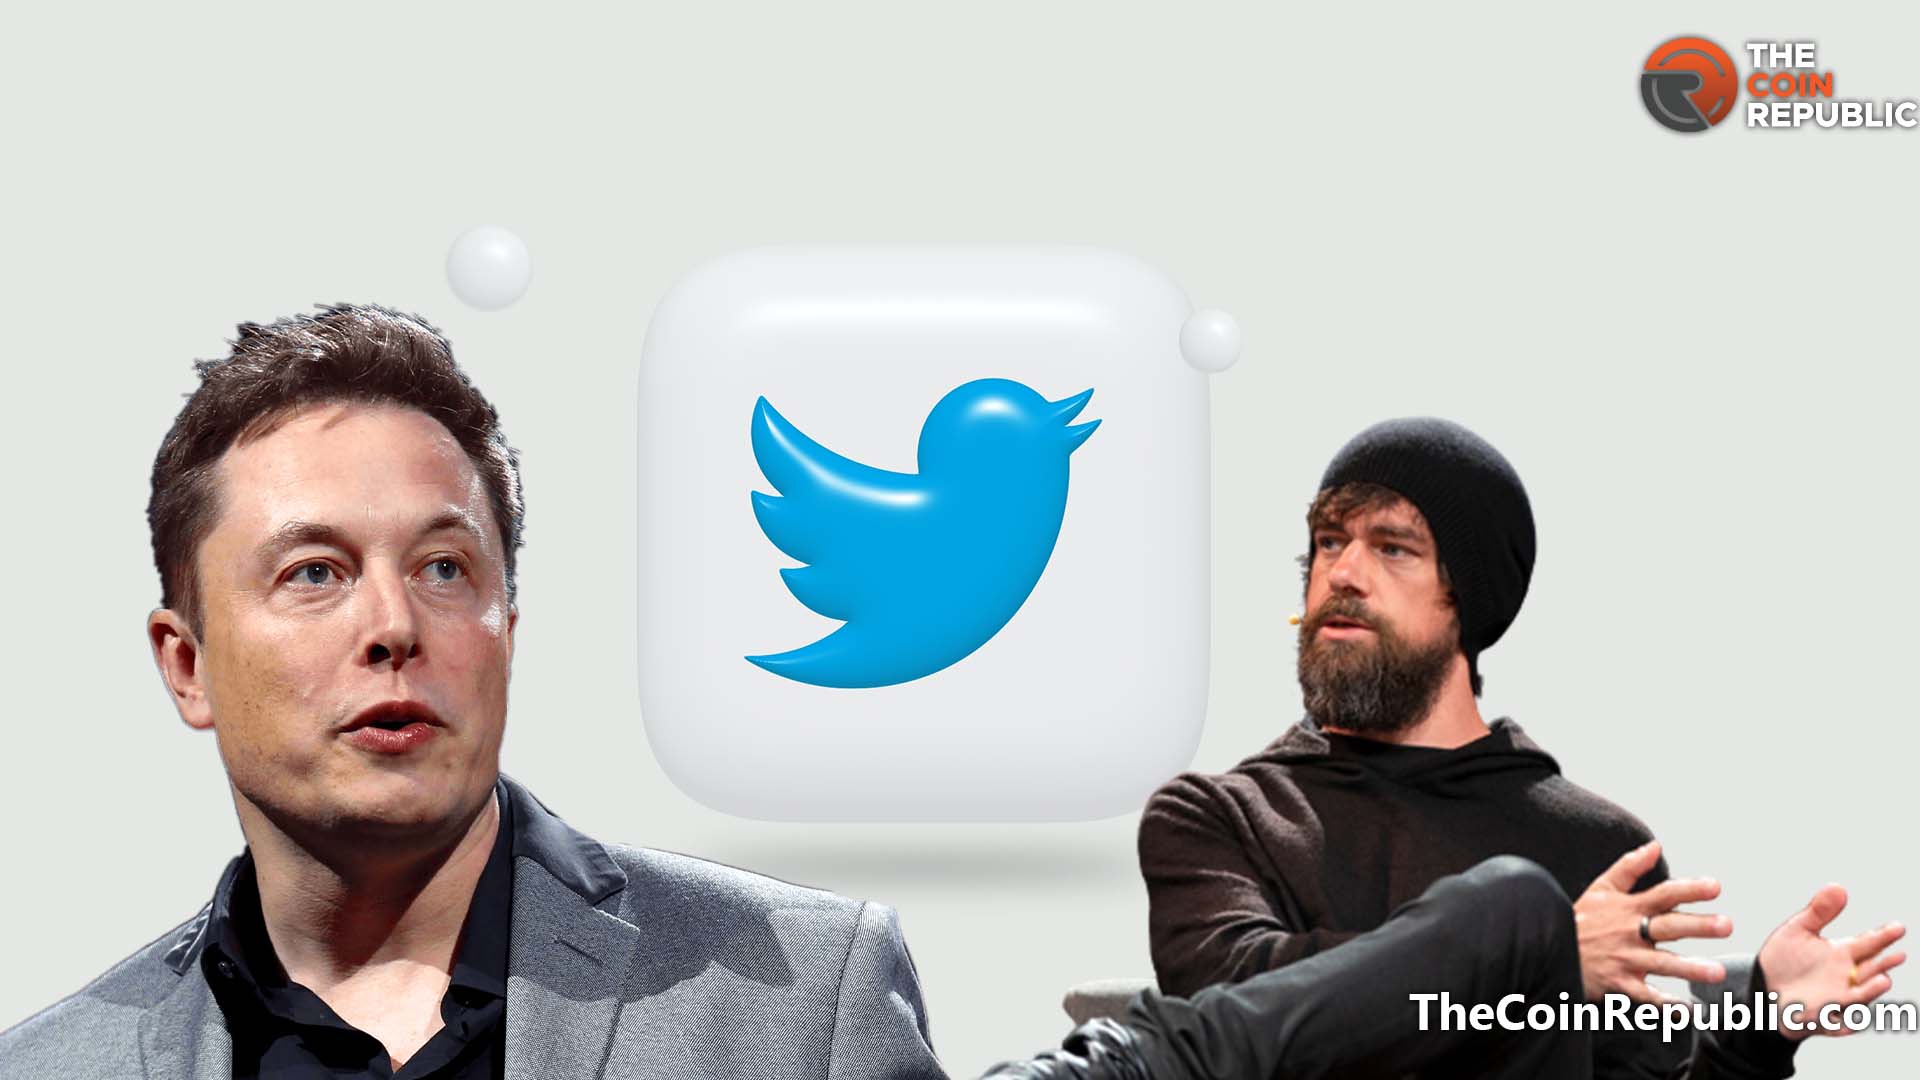 Jack Dorsey and Elon Musk address suggestions regarding anonymity on Twitter